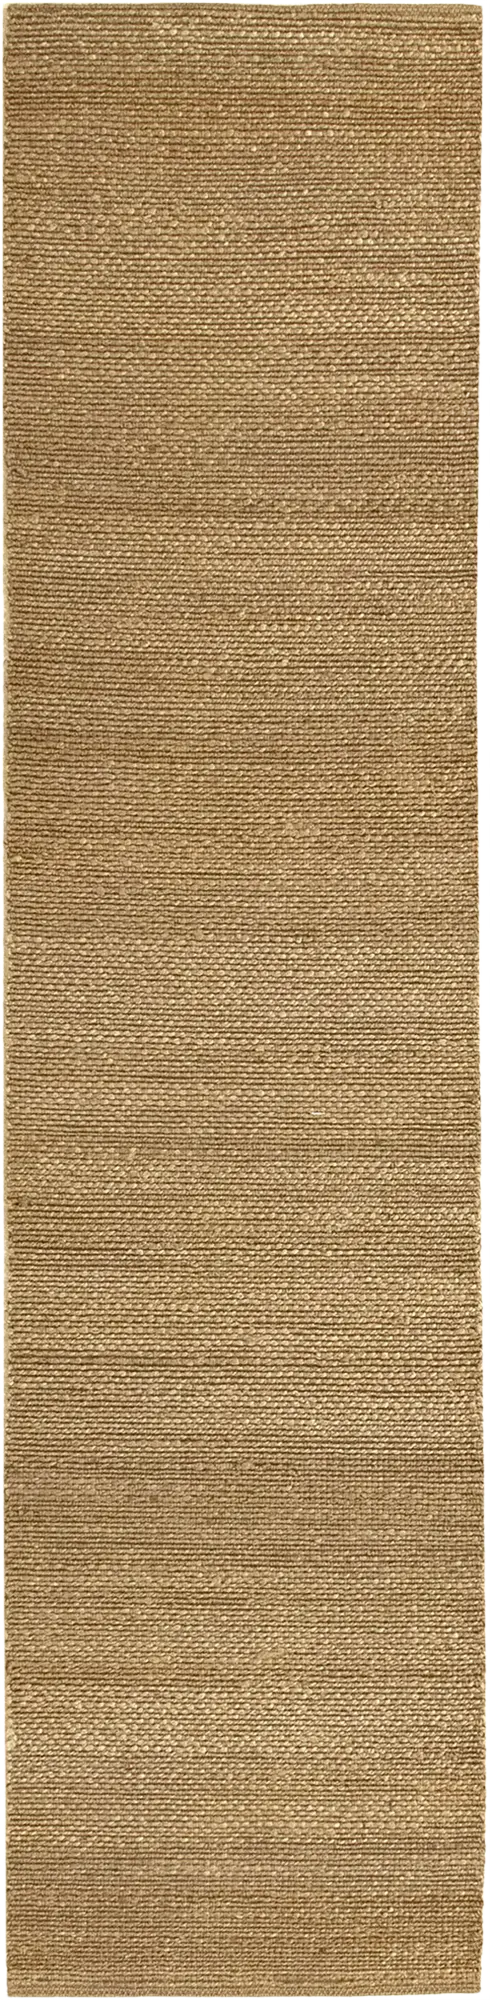 Alfombra pasillera yute giralda fibra natural 80x300cm